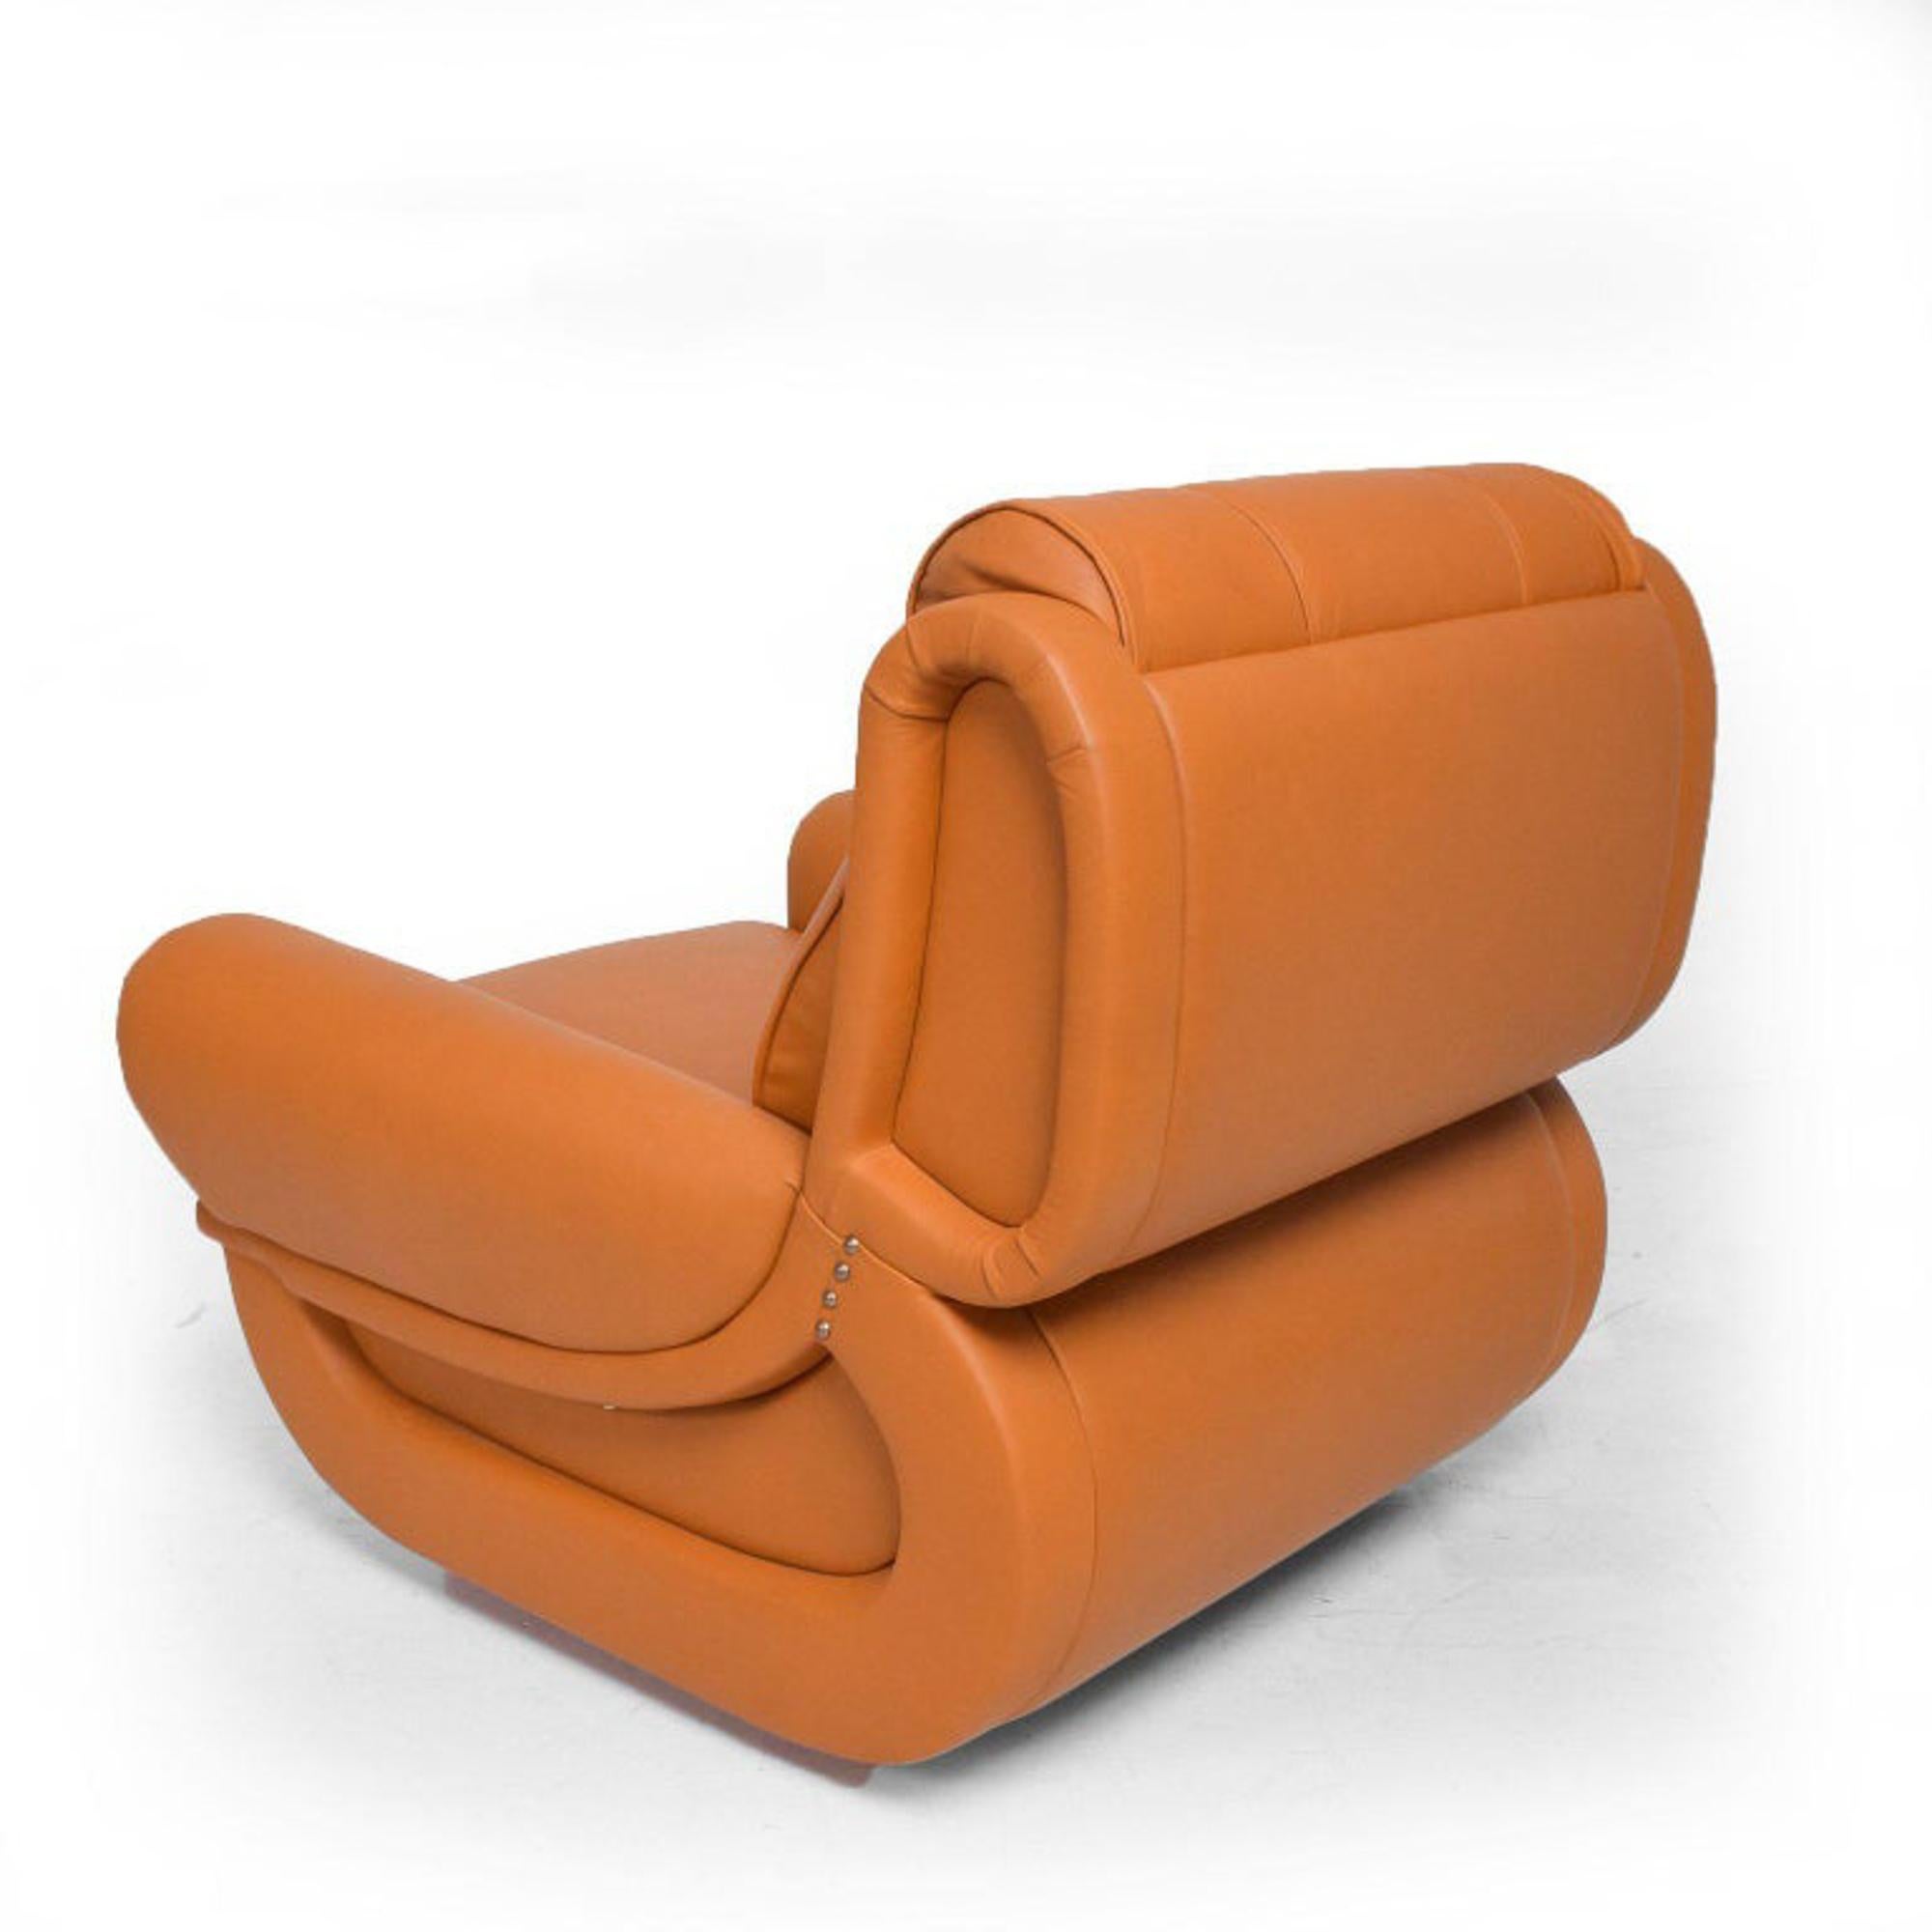 1960s Munari Italian Leather Lounge Chairs Restored For Sale 1